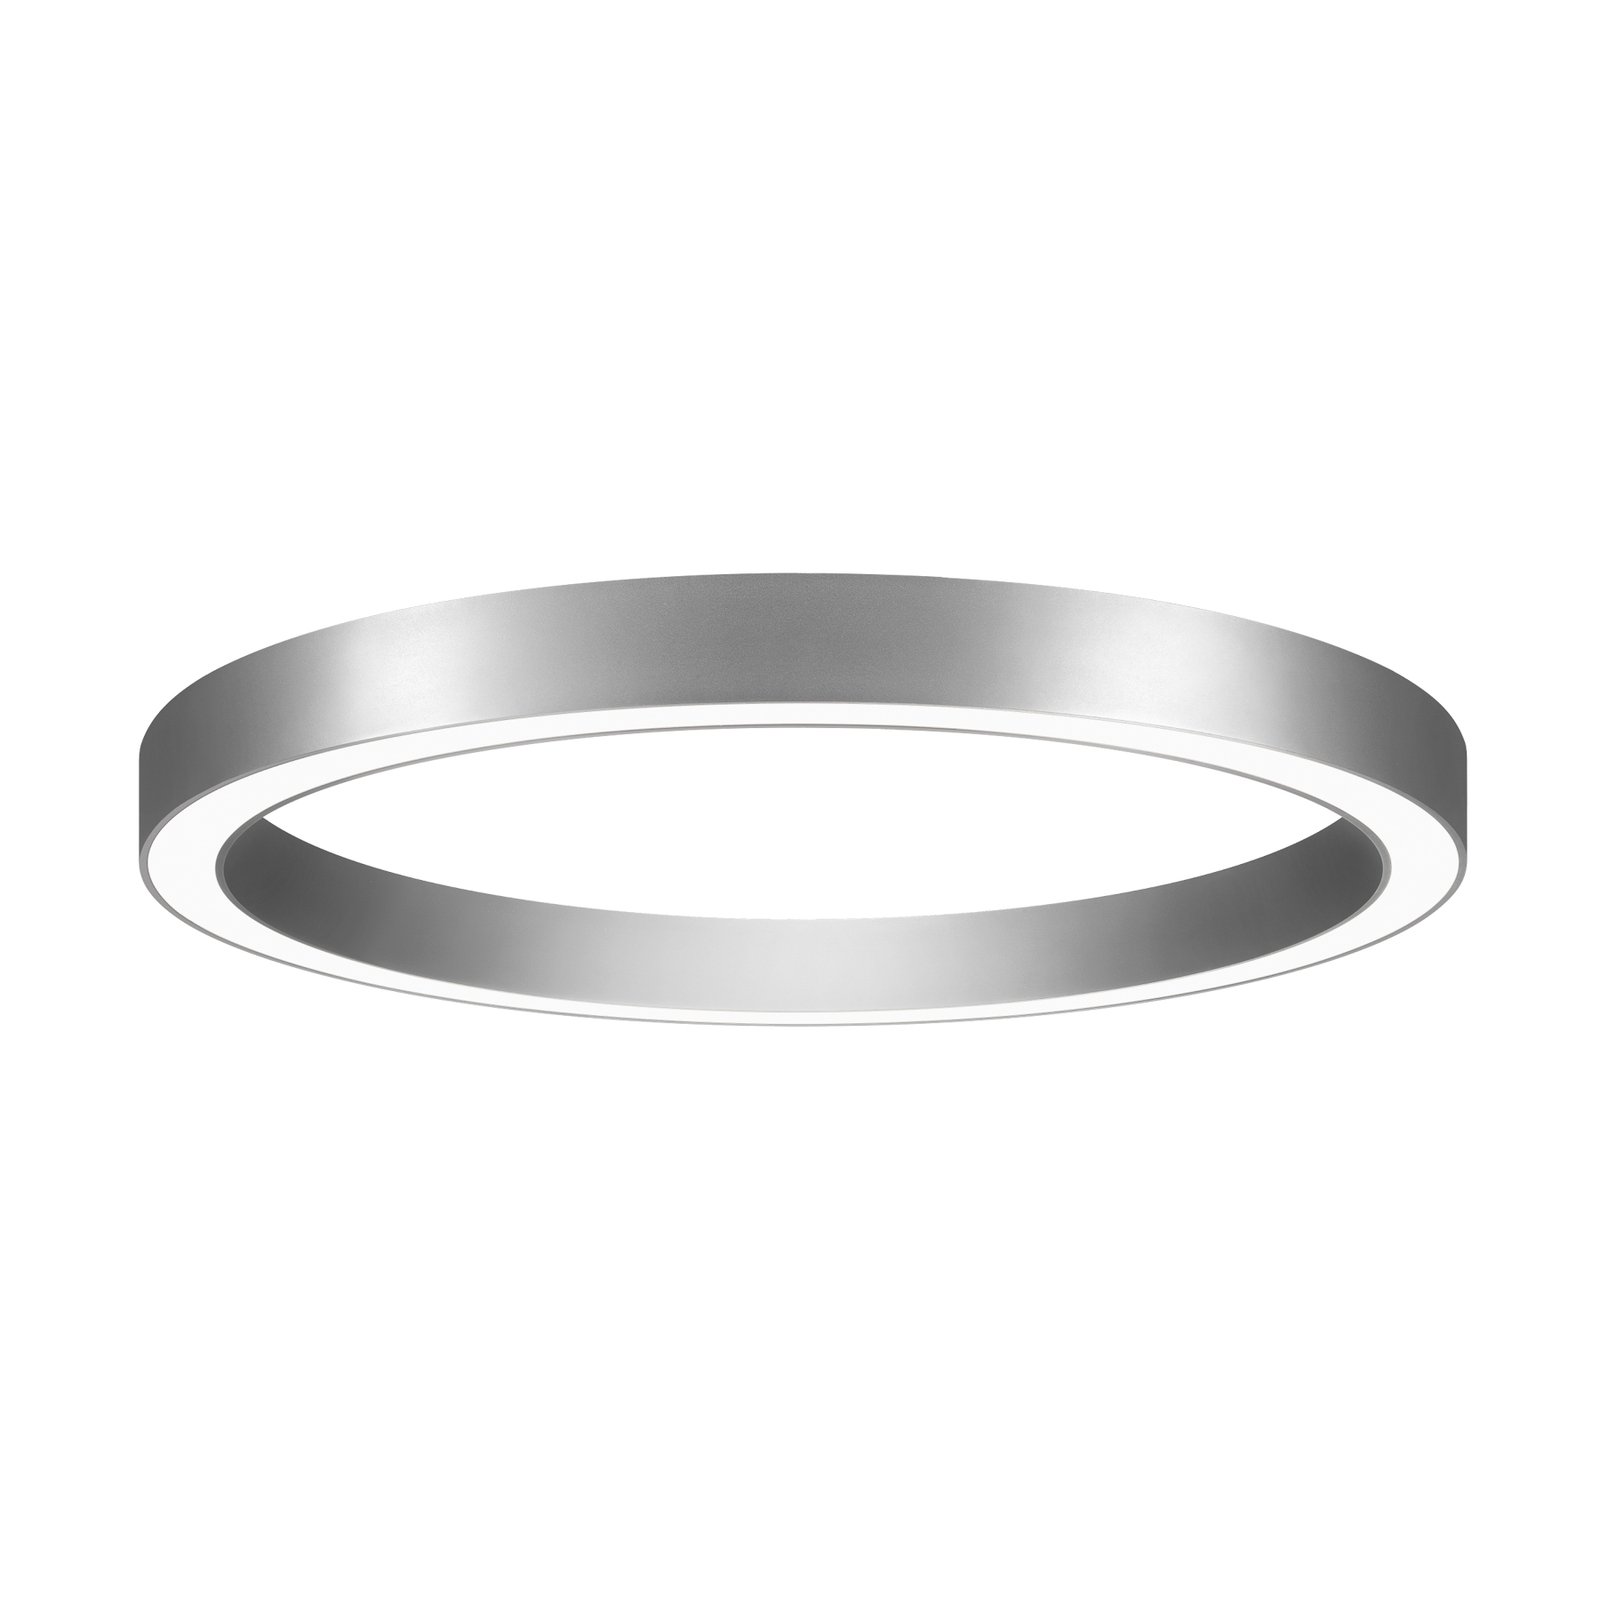 BRUMBERG Biro Circle Ring, Ø 45 cm, DALI, strieborná, 3 000 K